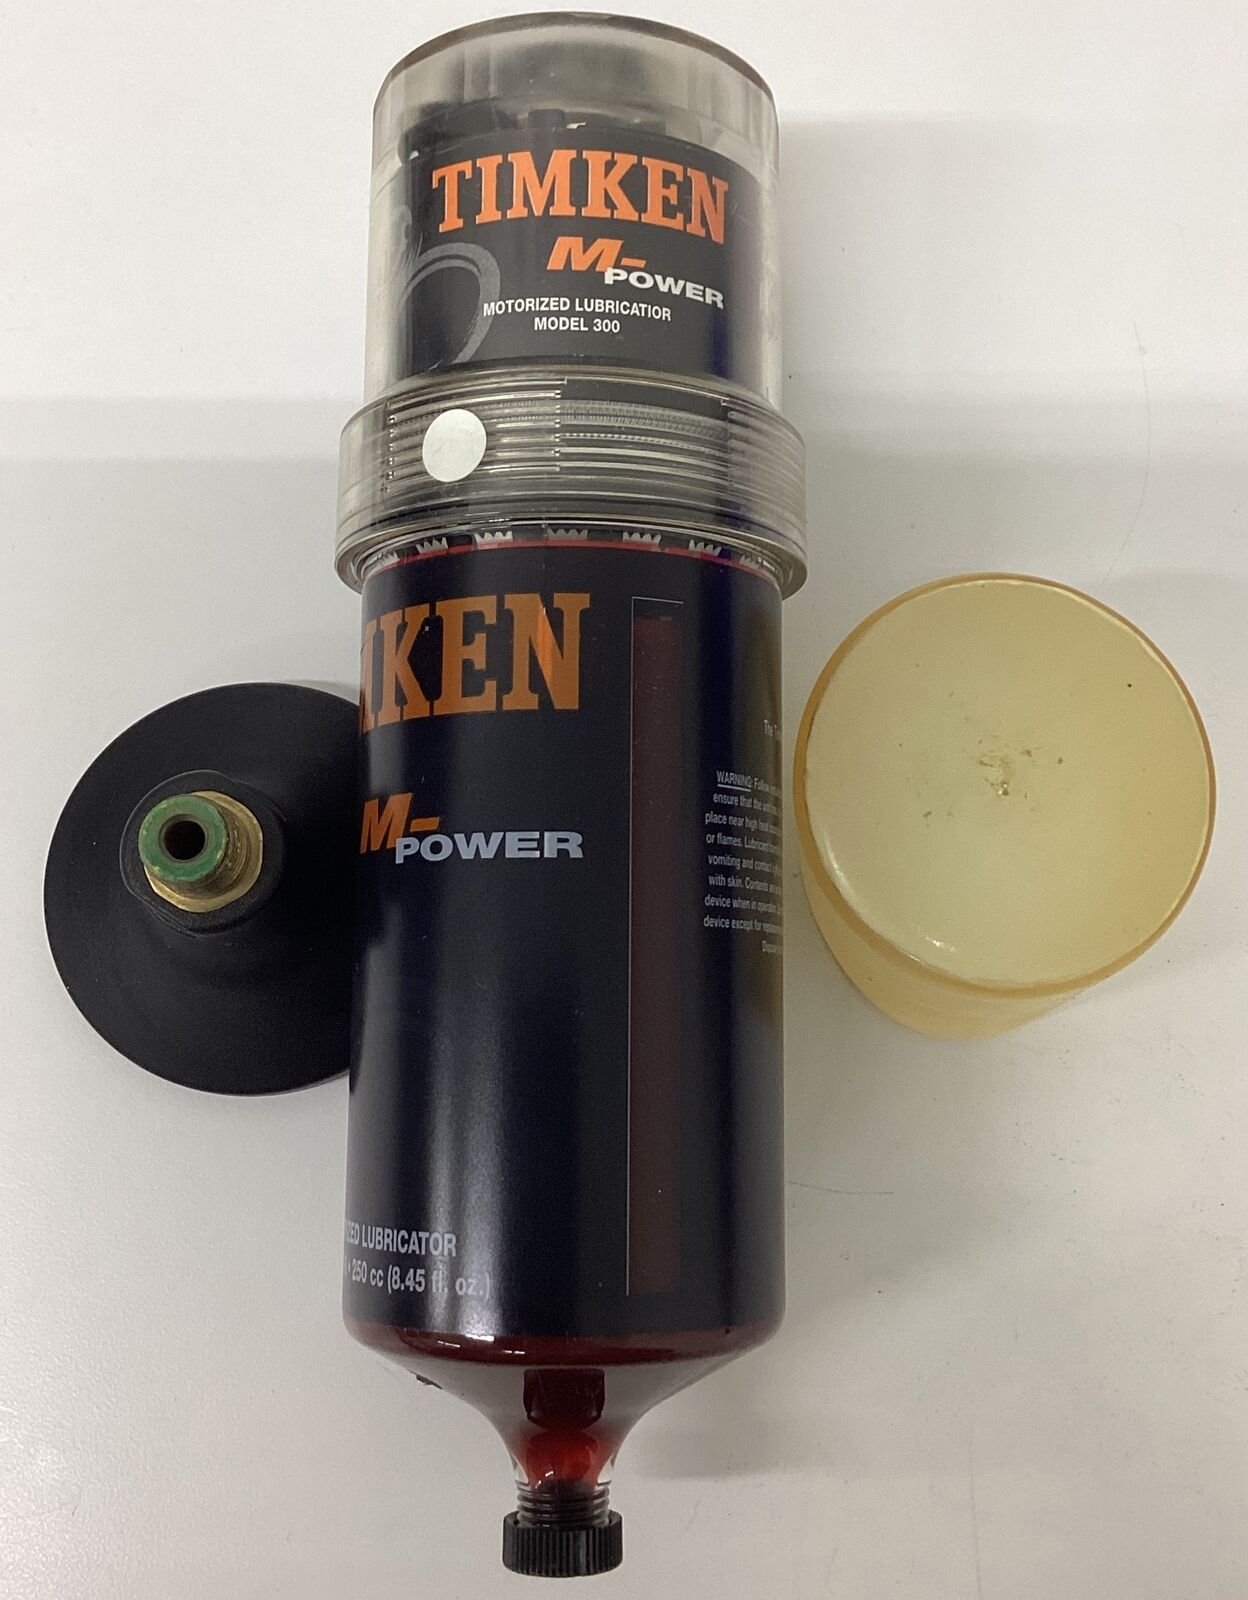 Timken  PM282405 G-Power, M-Power Single Point Lubricator (GR226) - 0